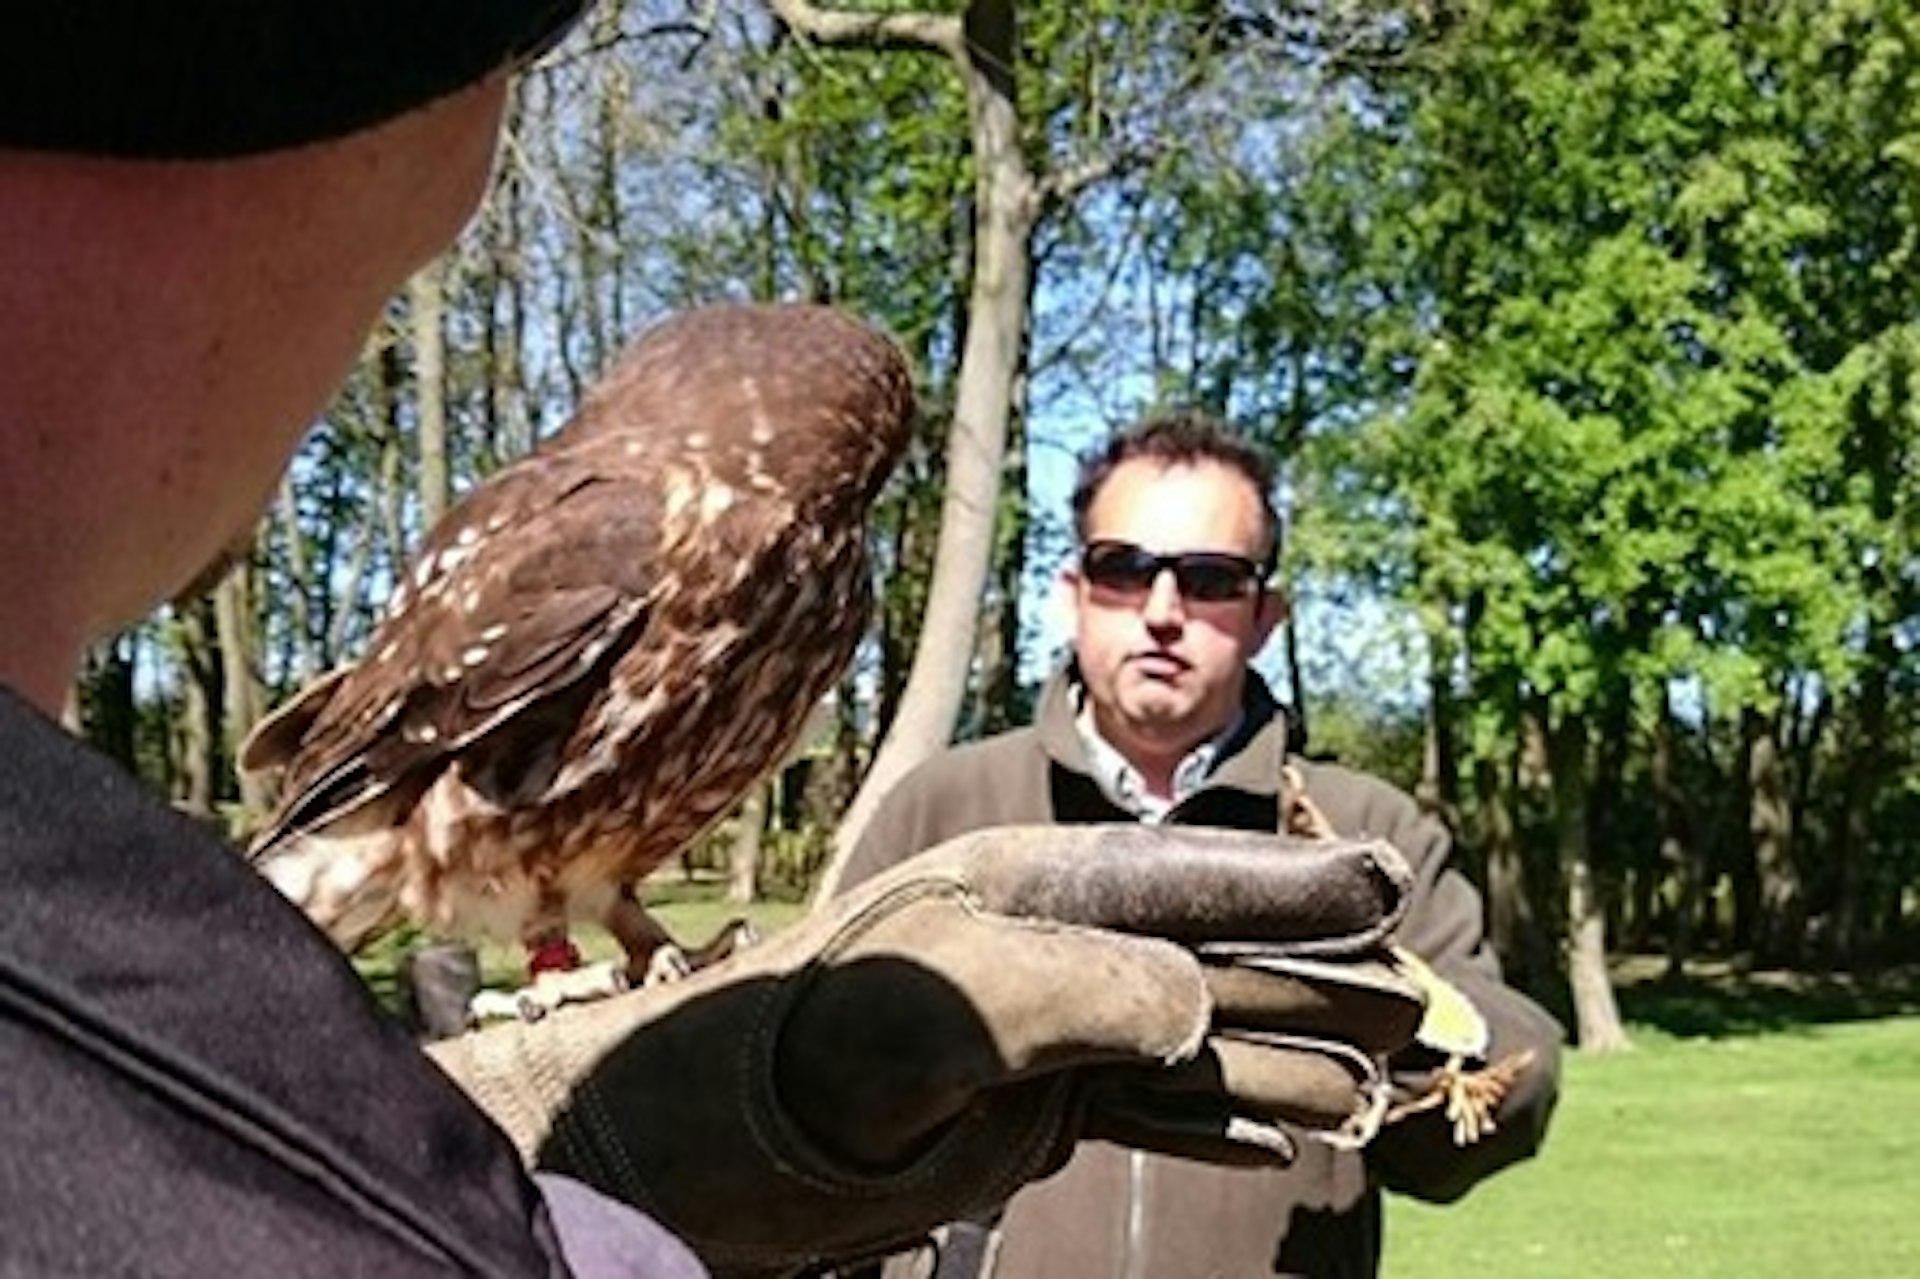 Owl Encounter for Two at Bridlington Animal Park 2